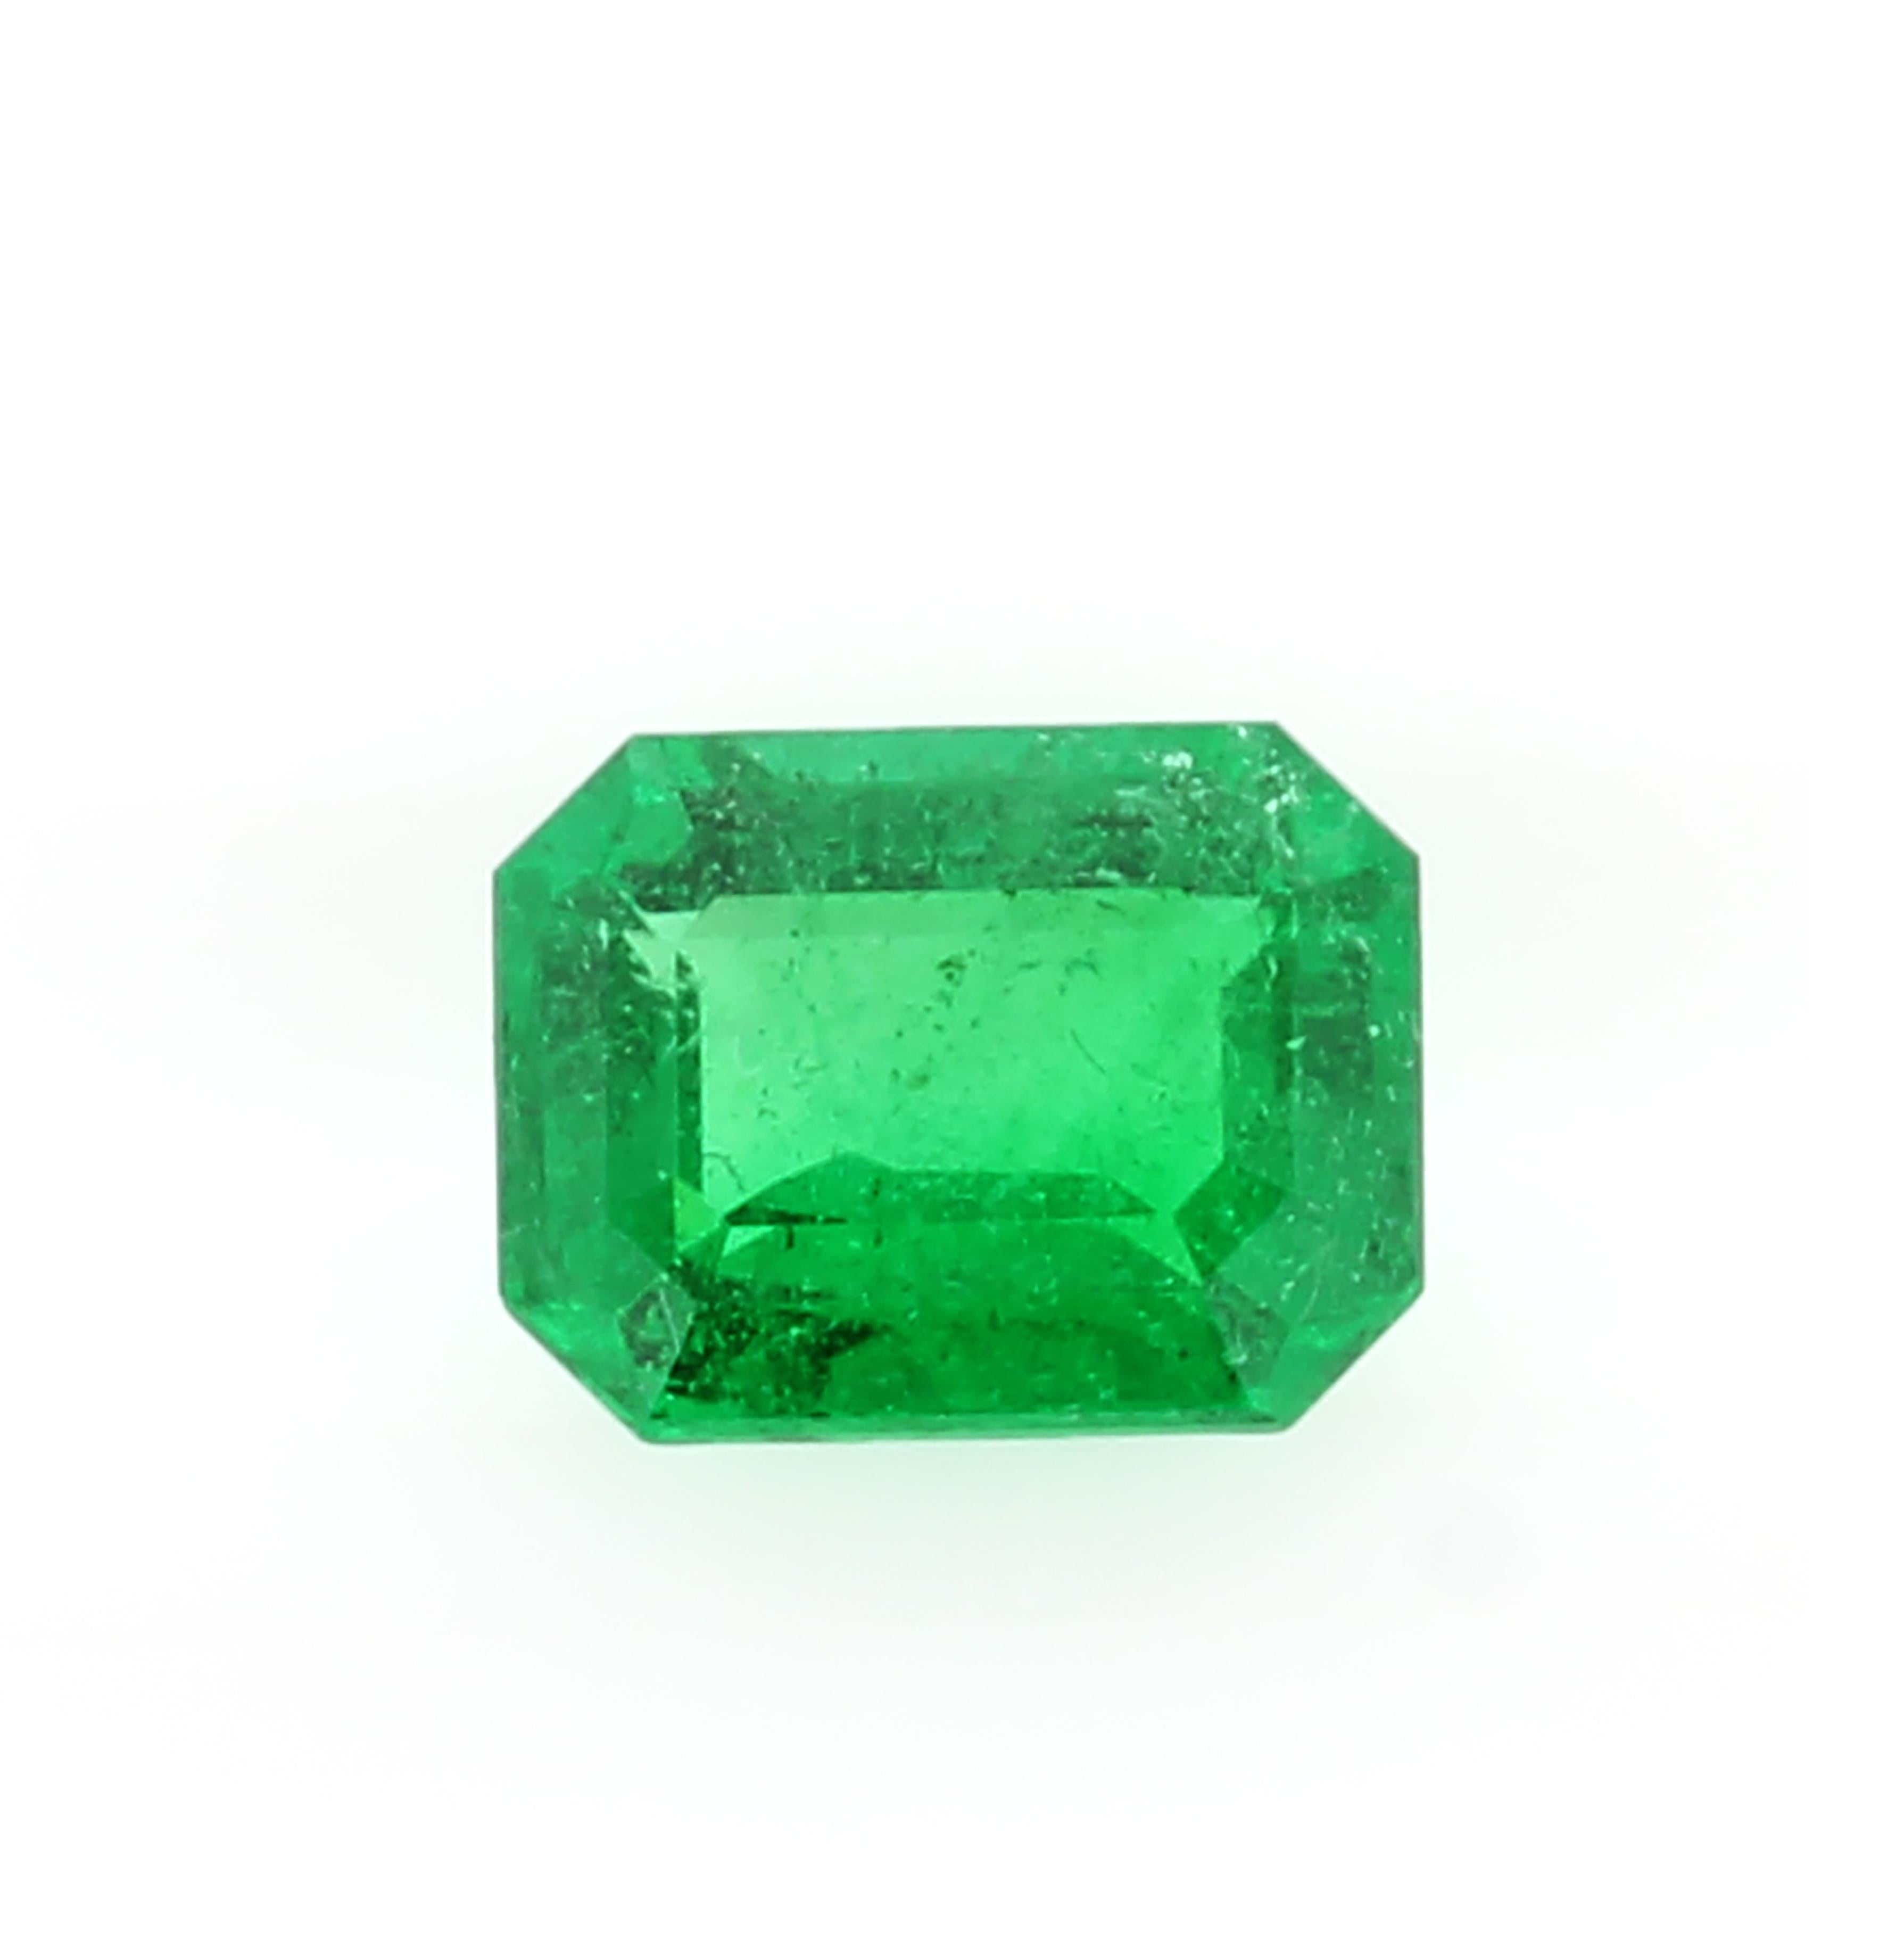 • Gemstone: Emerald
• Weight: 2.10 Carats
• Shape: Emerald
• Origin: Zambia
• Enhancement: Minor Traditional
• Dimensions: 10.34 x 8.06 x 5.57mm
